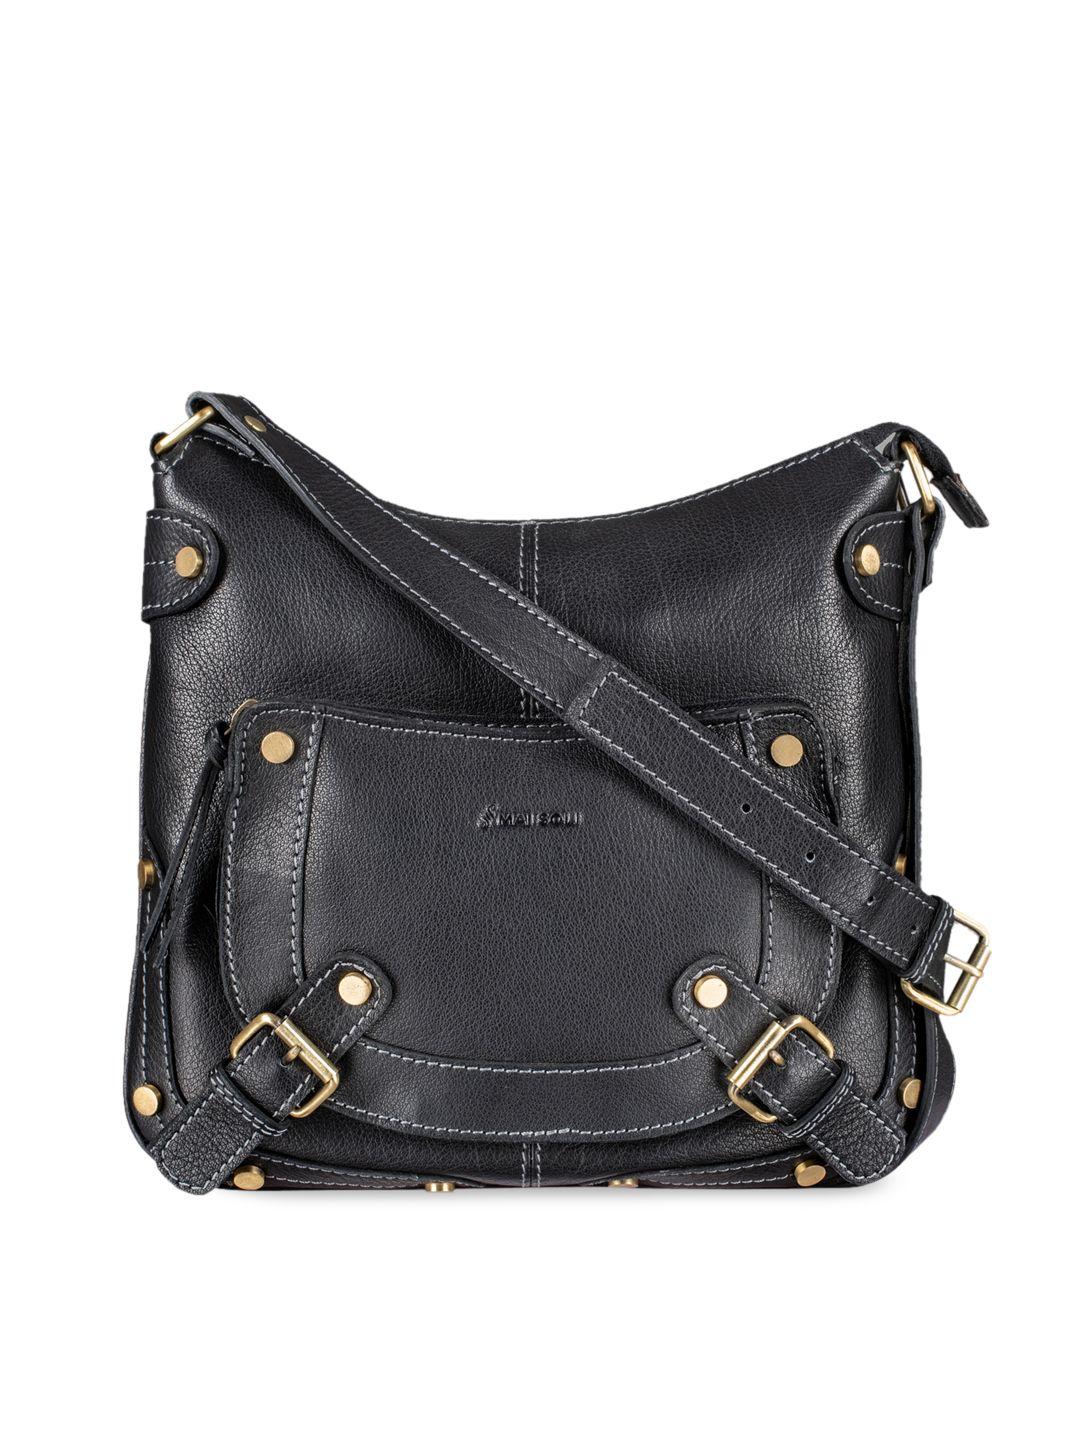 mai soli women black textured leather sling bag